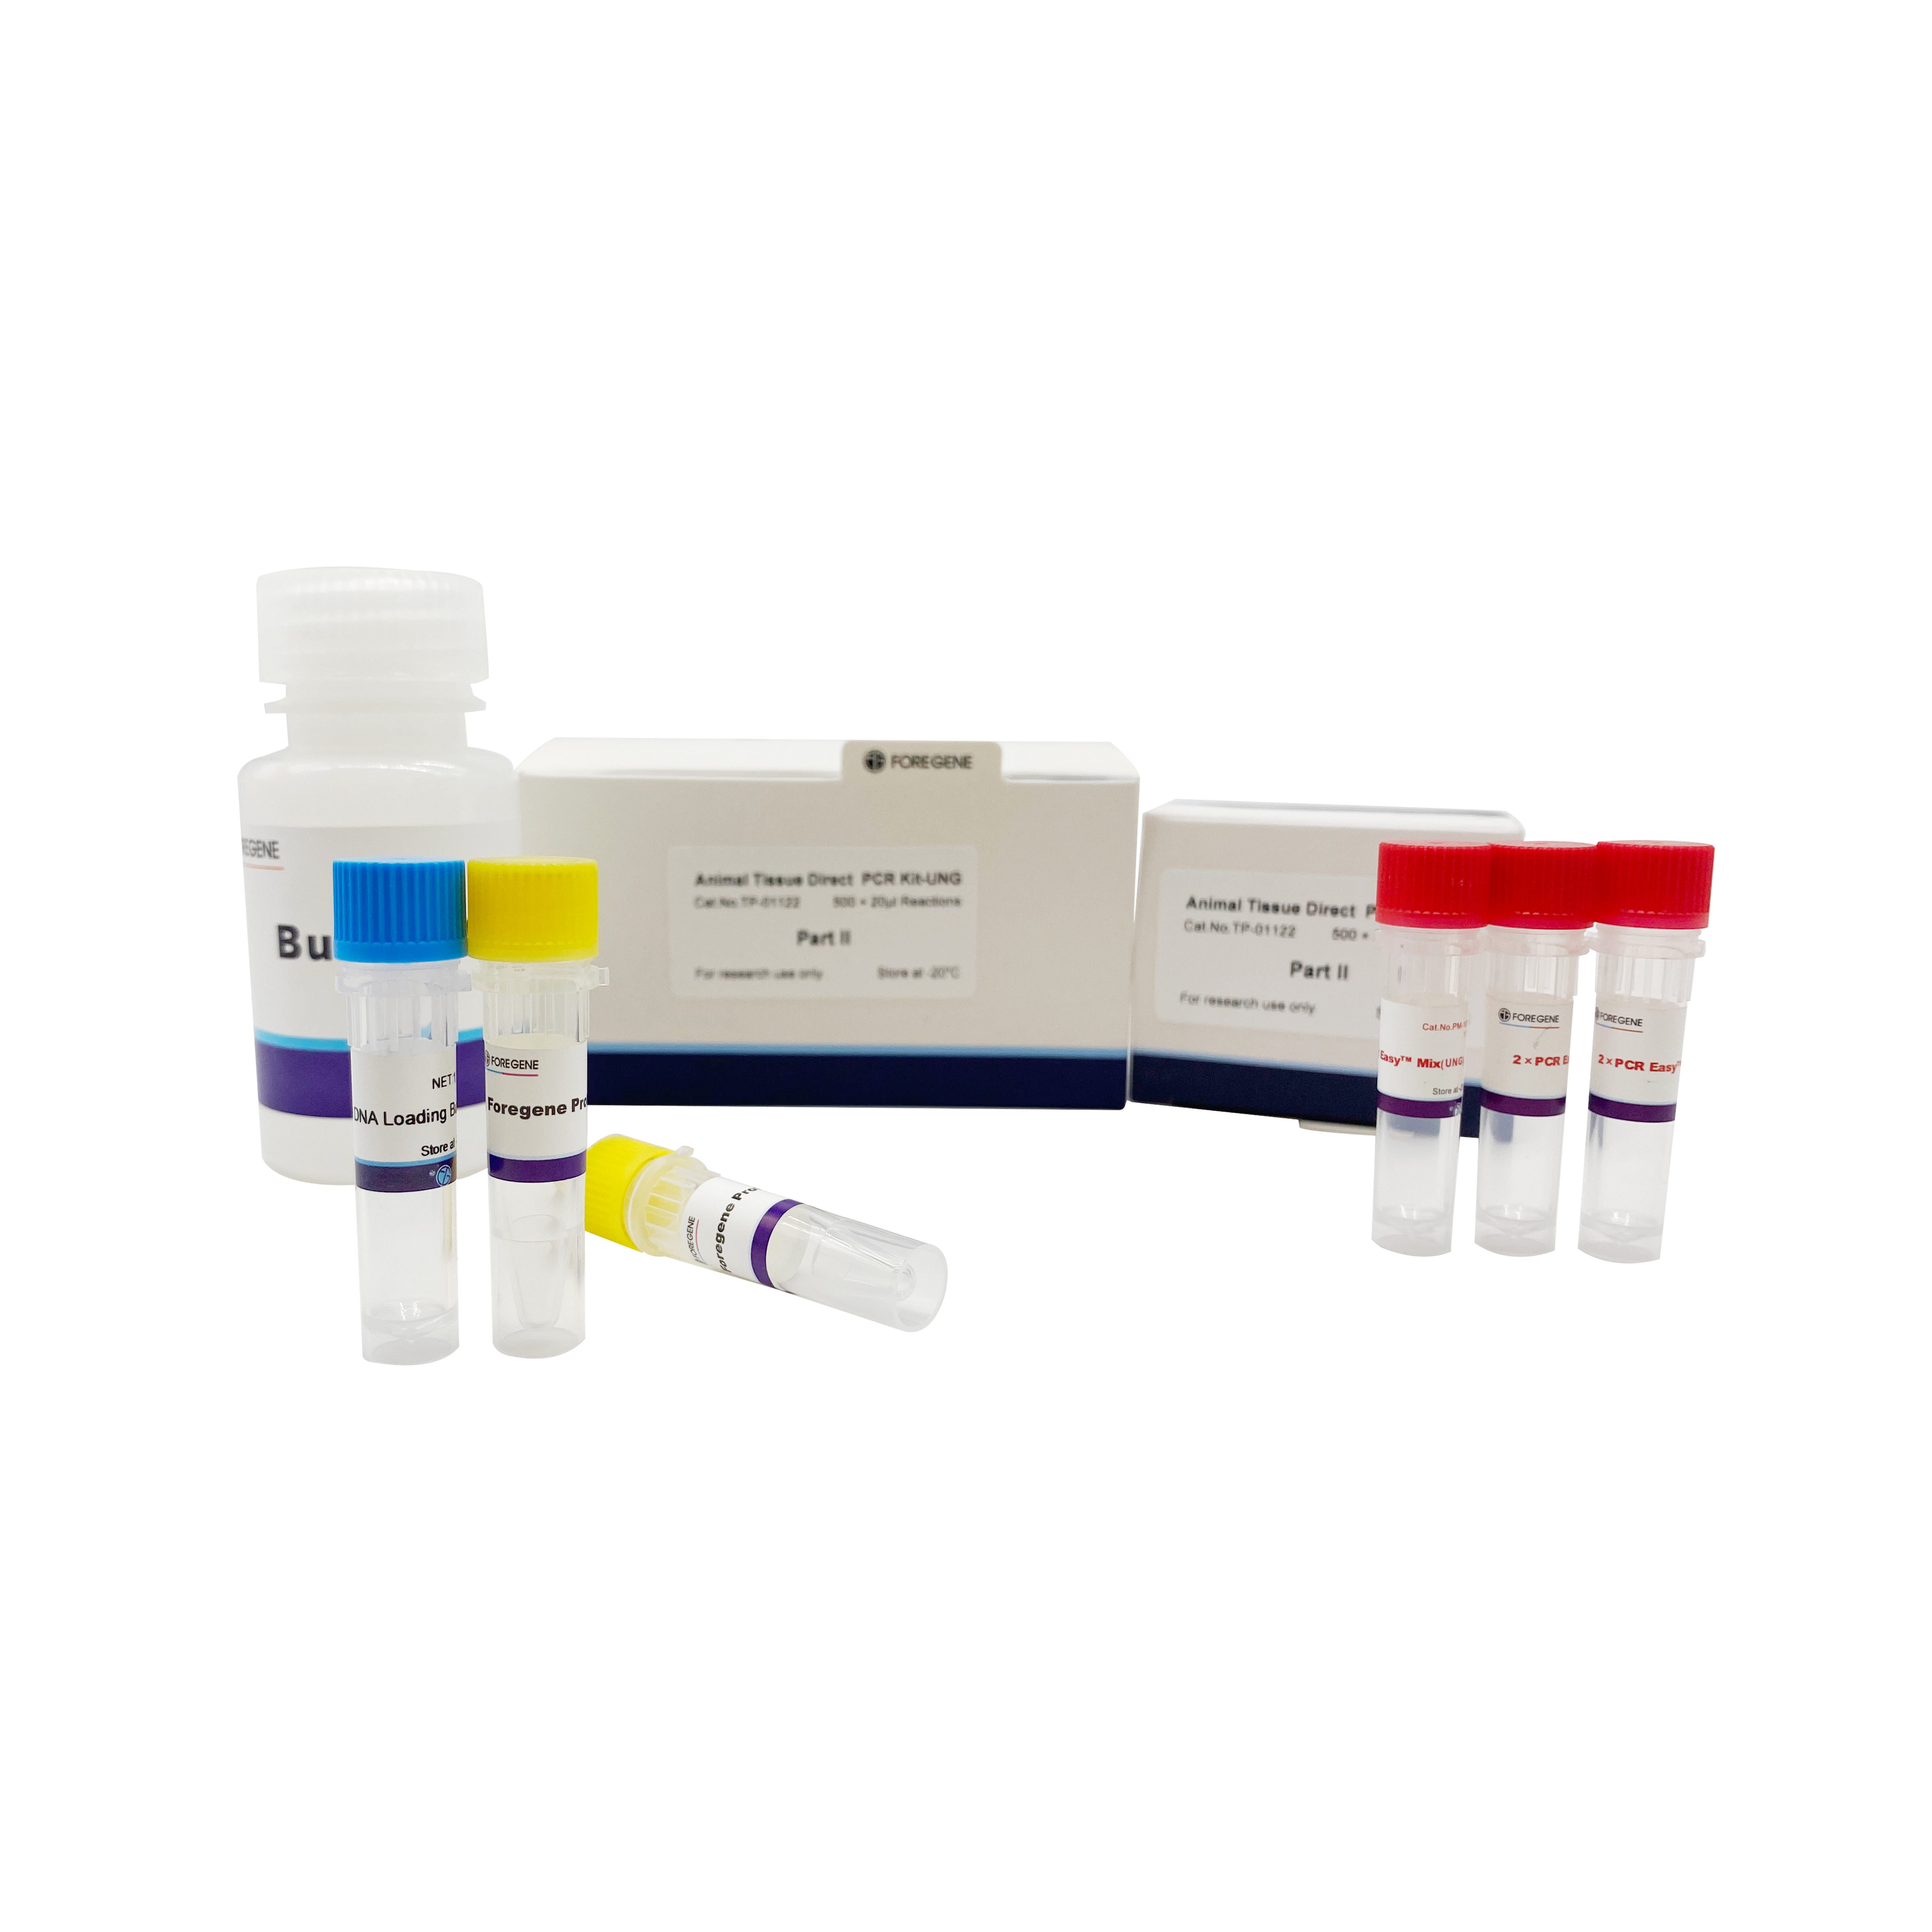 Animal Tissue Direct PCR Kit-UNG (bez extrakce DNA)